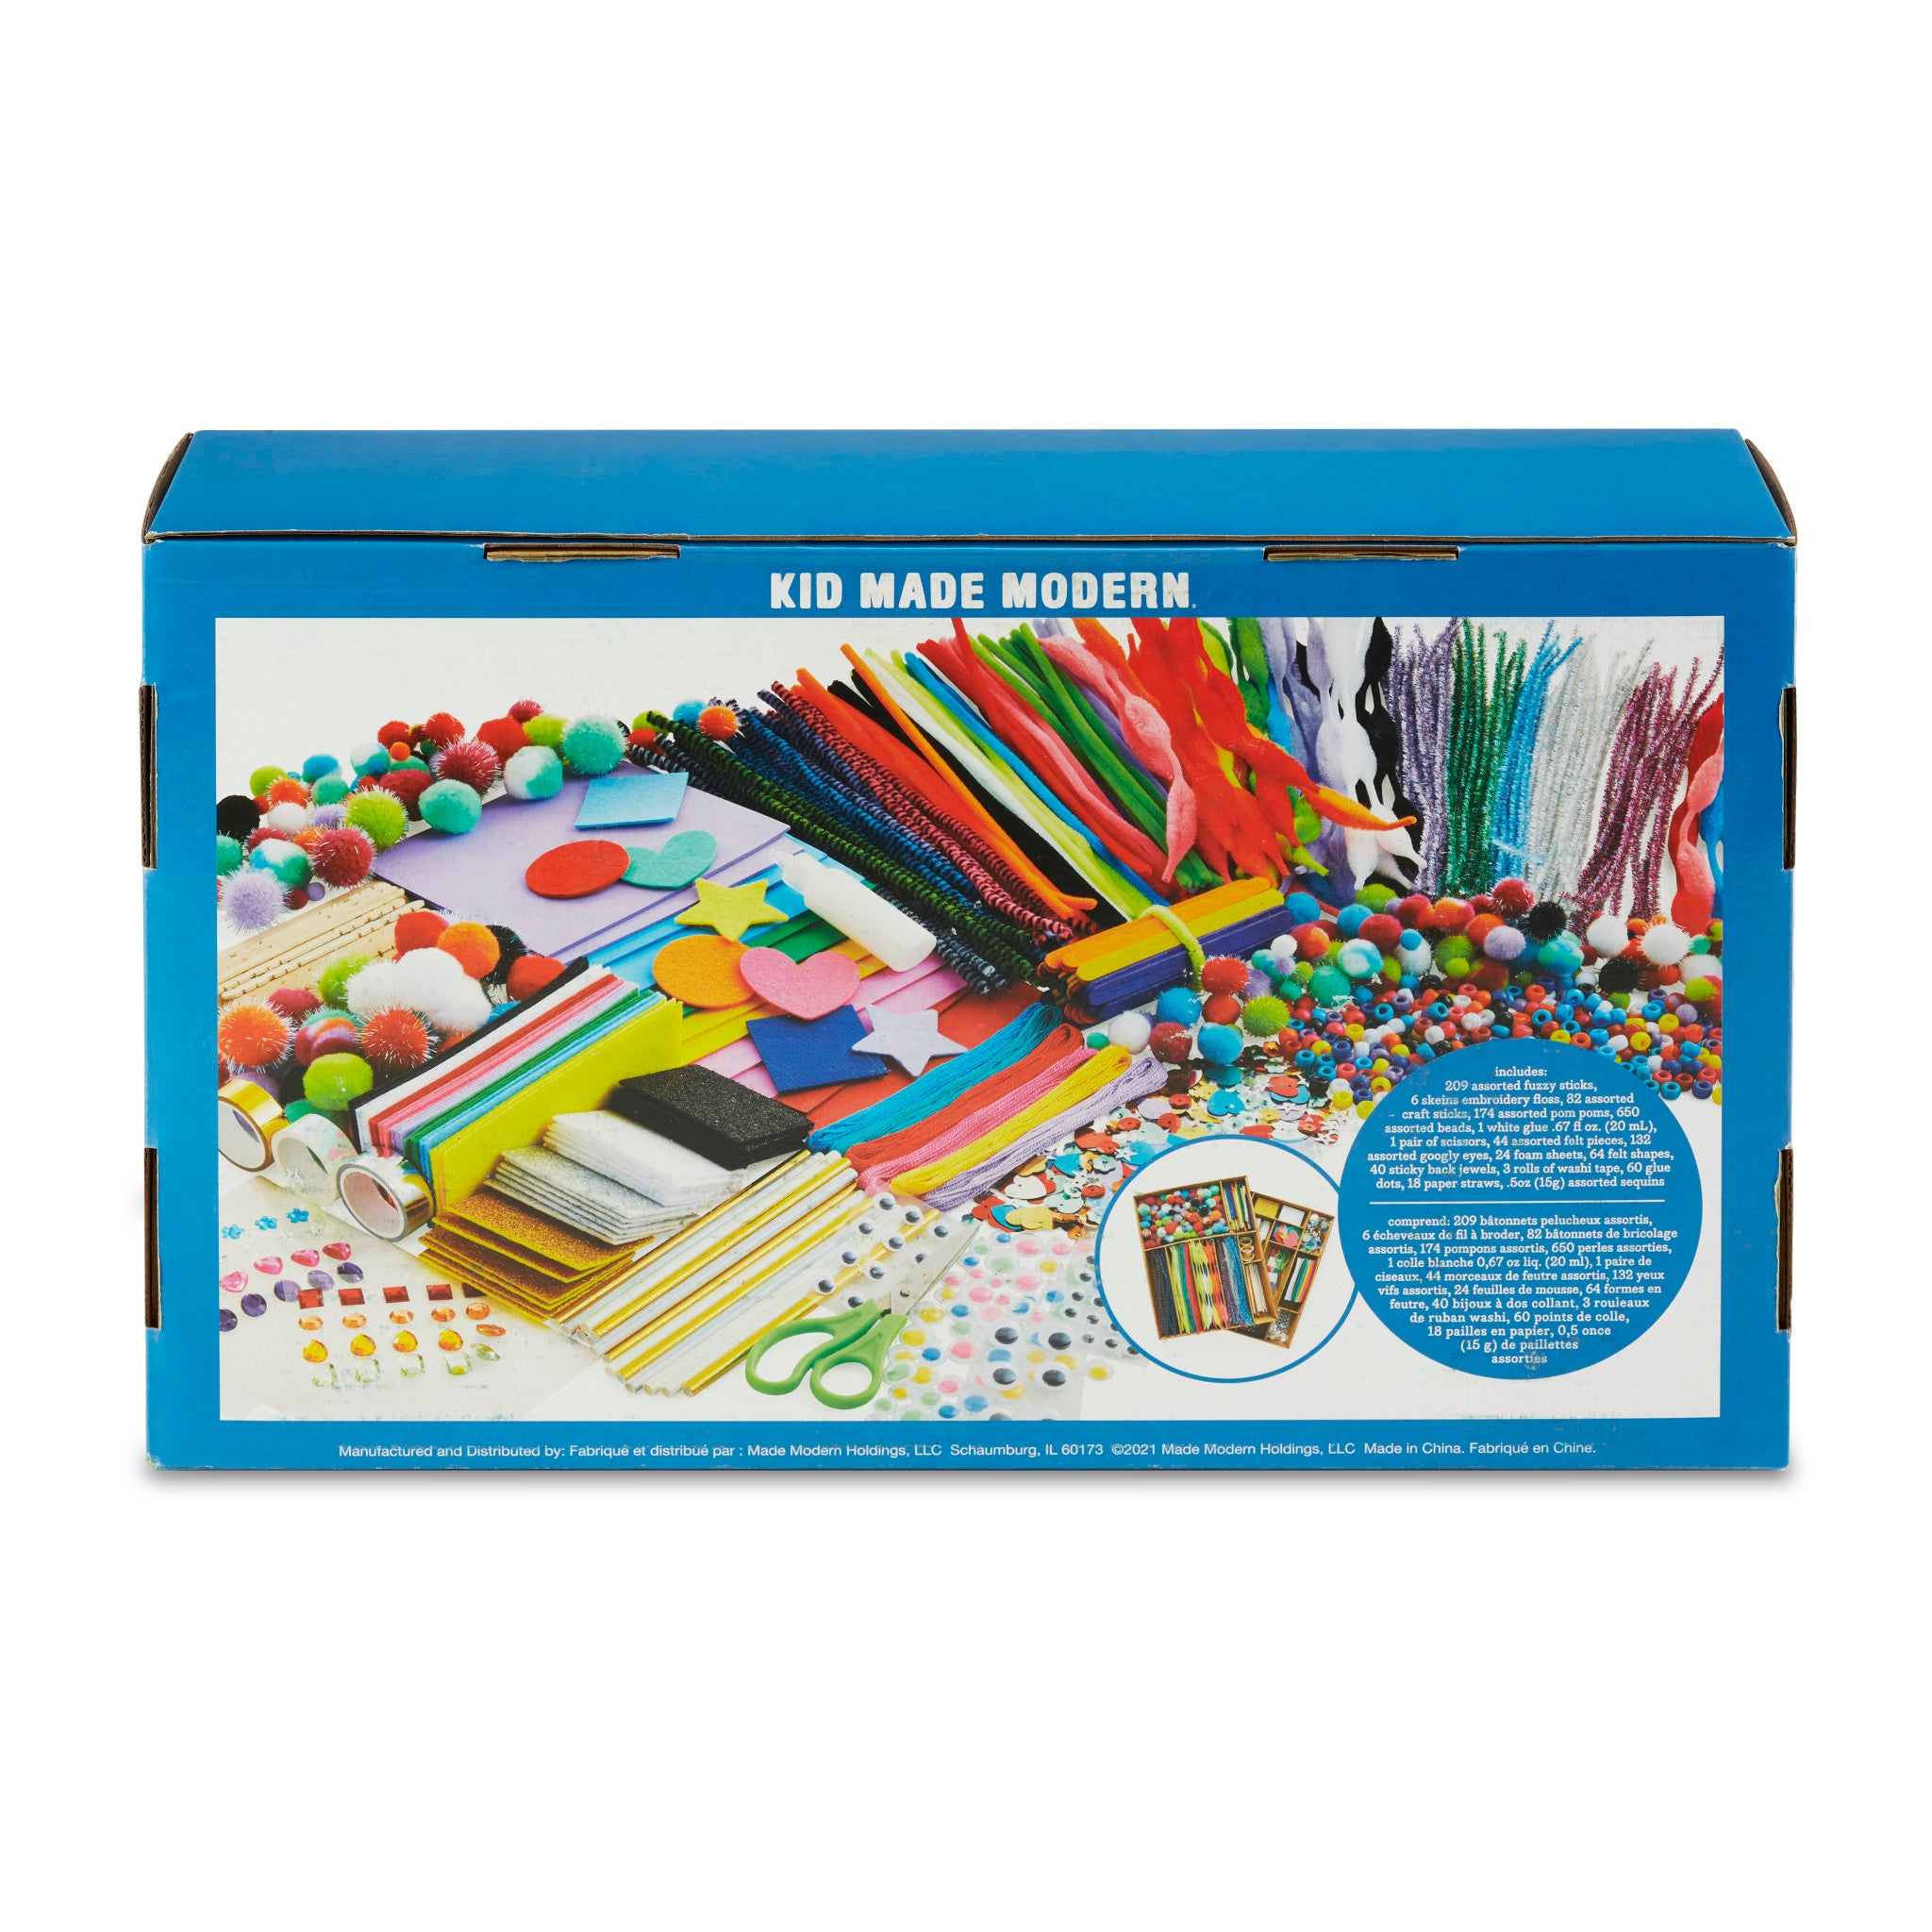 Wholesale Children's Art Supplies - Bulk Buy Craft Kits - DollarDays